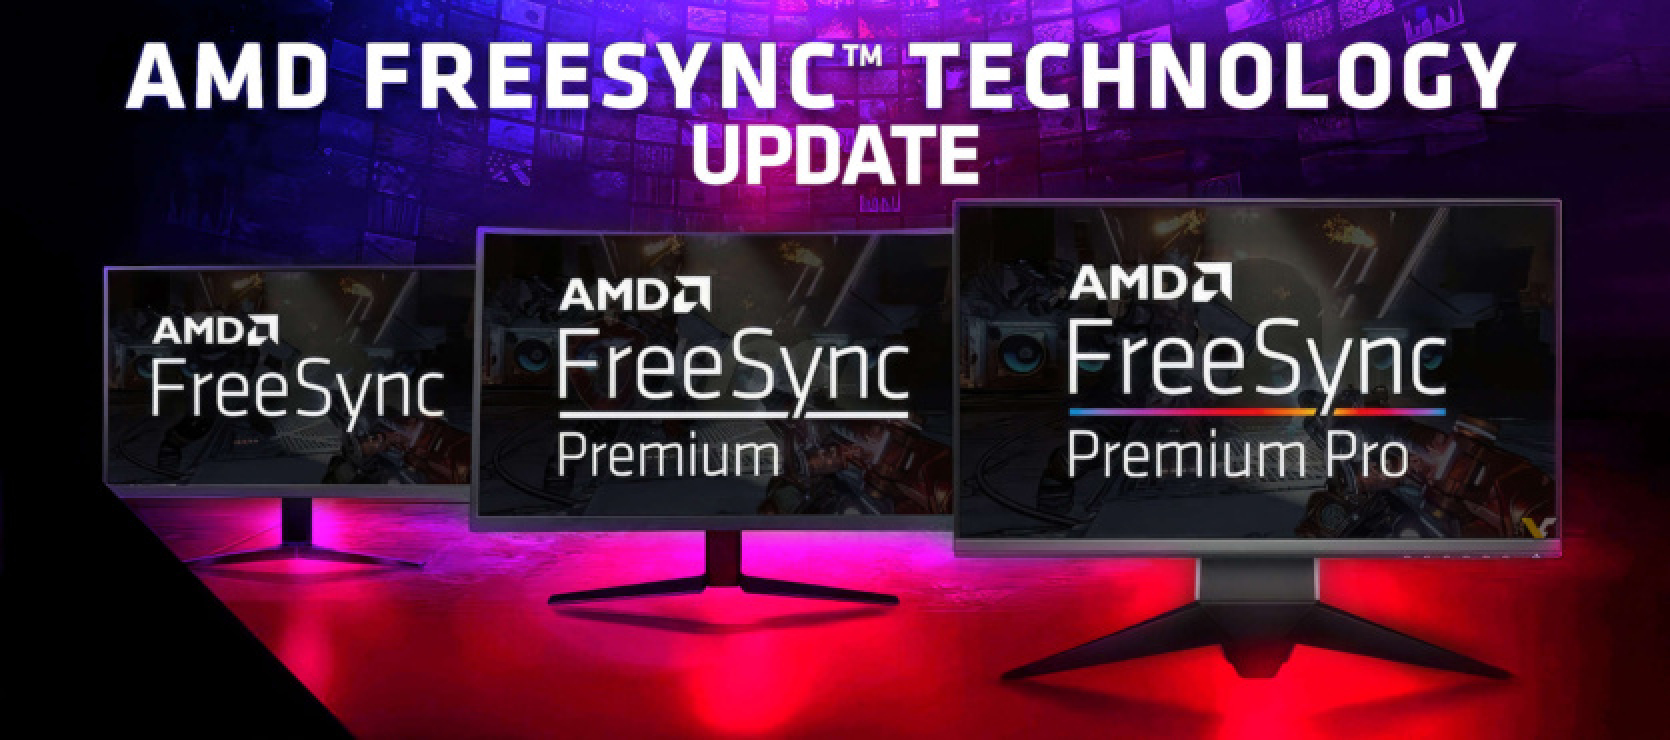 AMD updates FreeSync specs, FHD monitors will support 144Hz